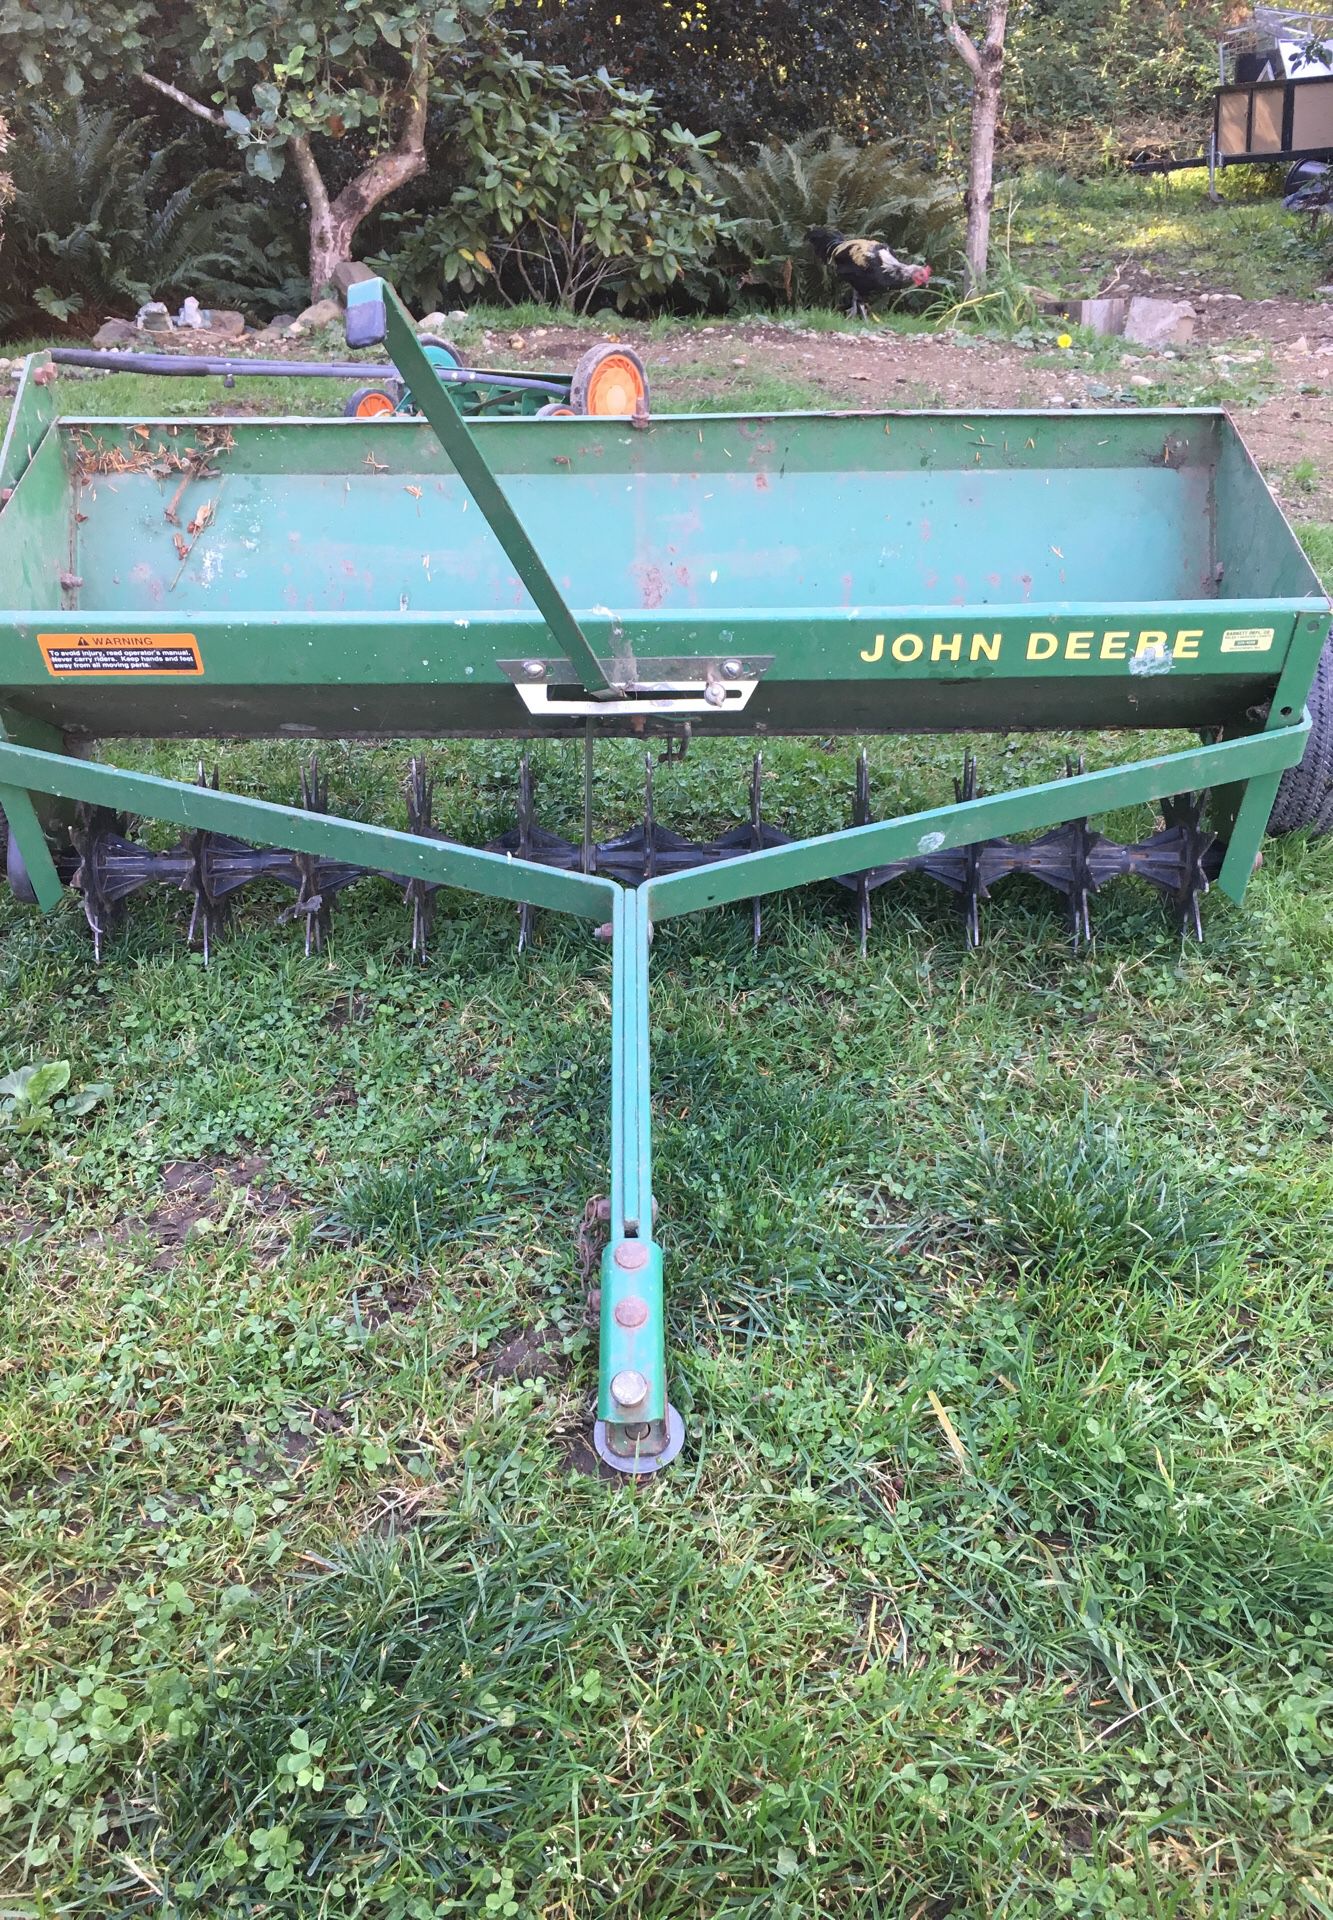 John Deere aerator and seeder.